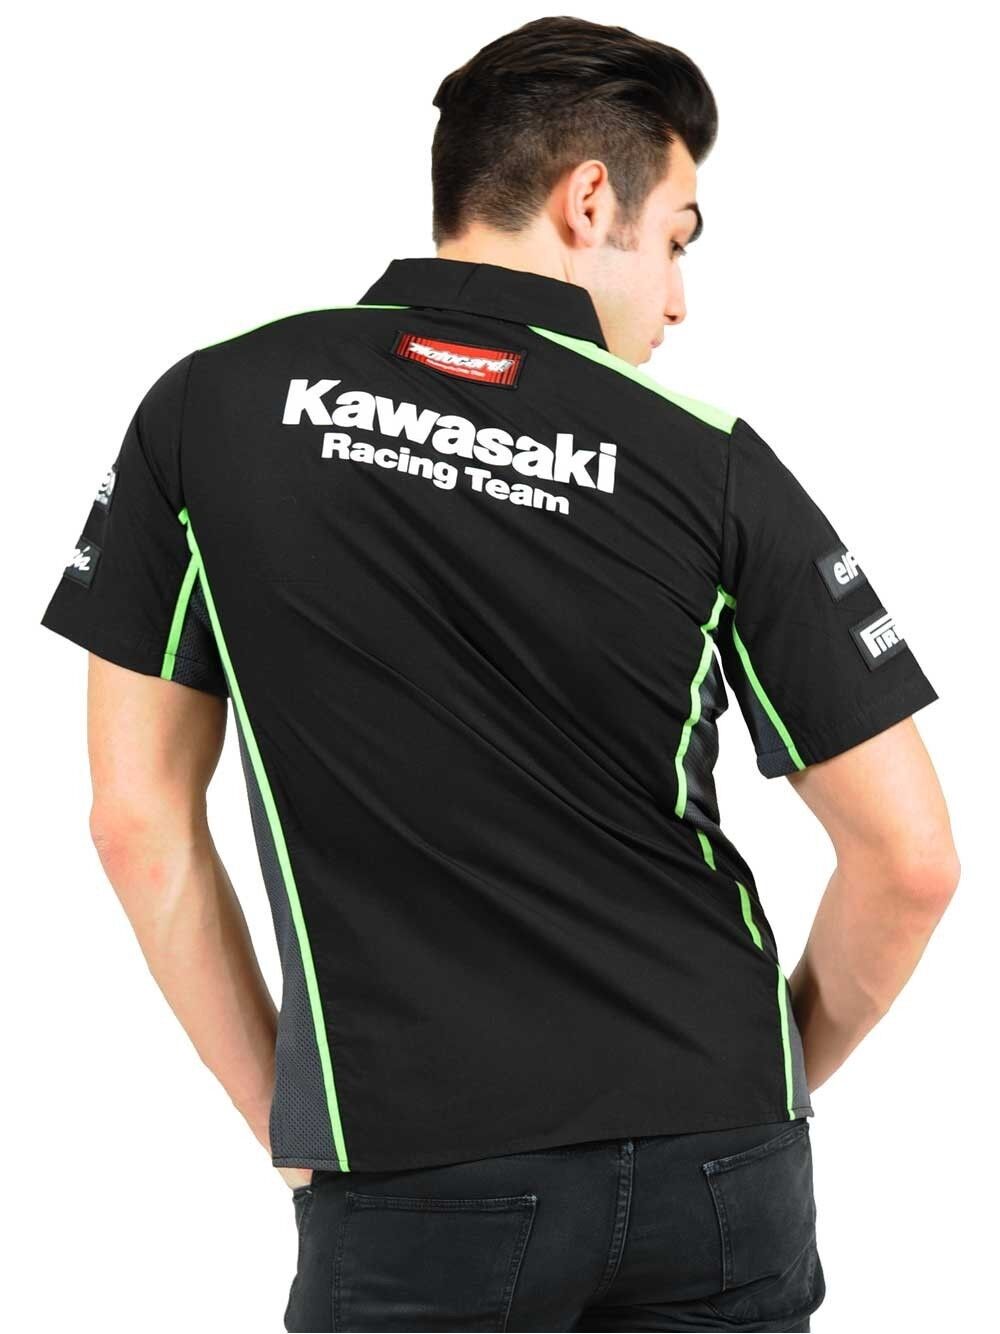 Official Kawasaki Motocard Team Race Shirt - 16 91501